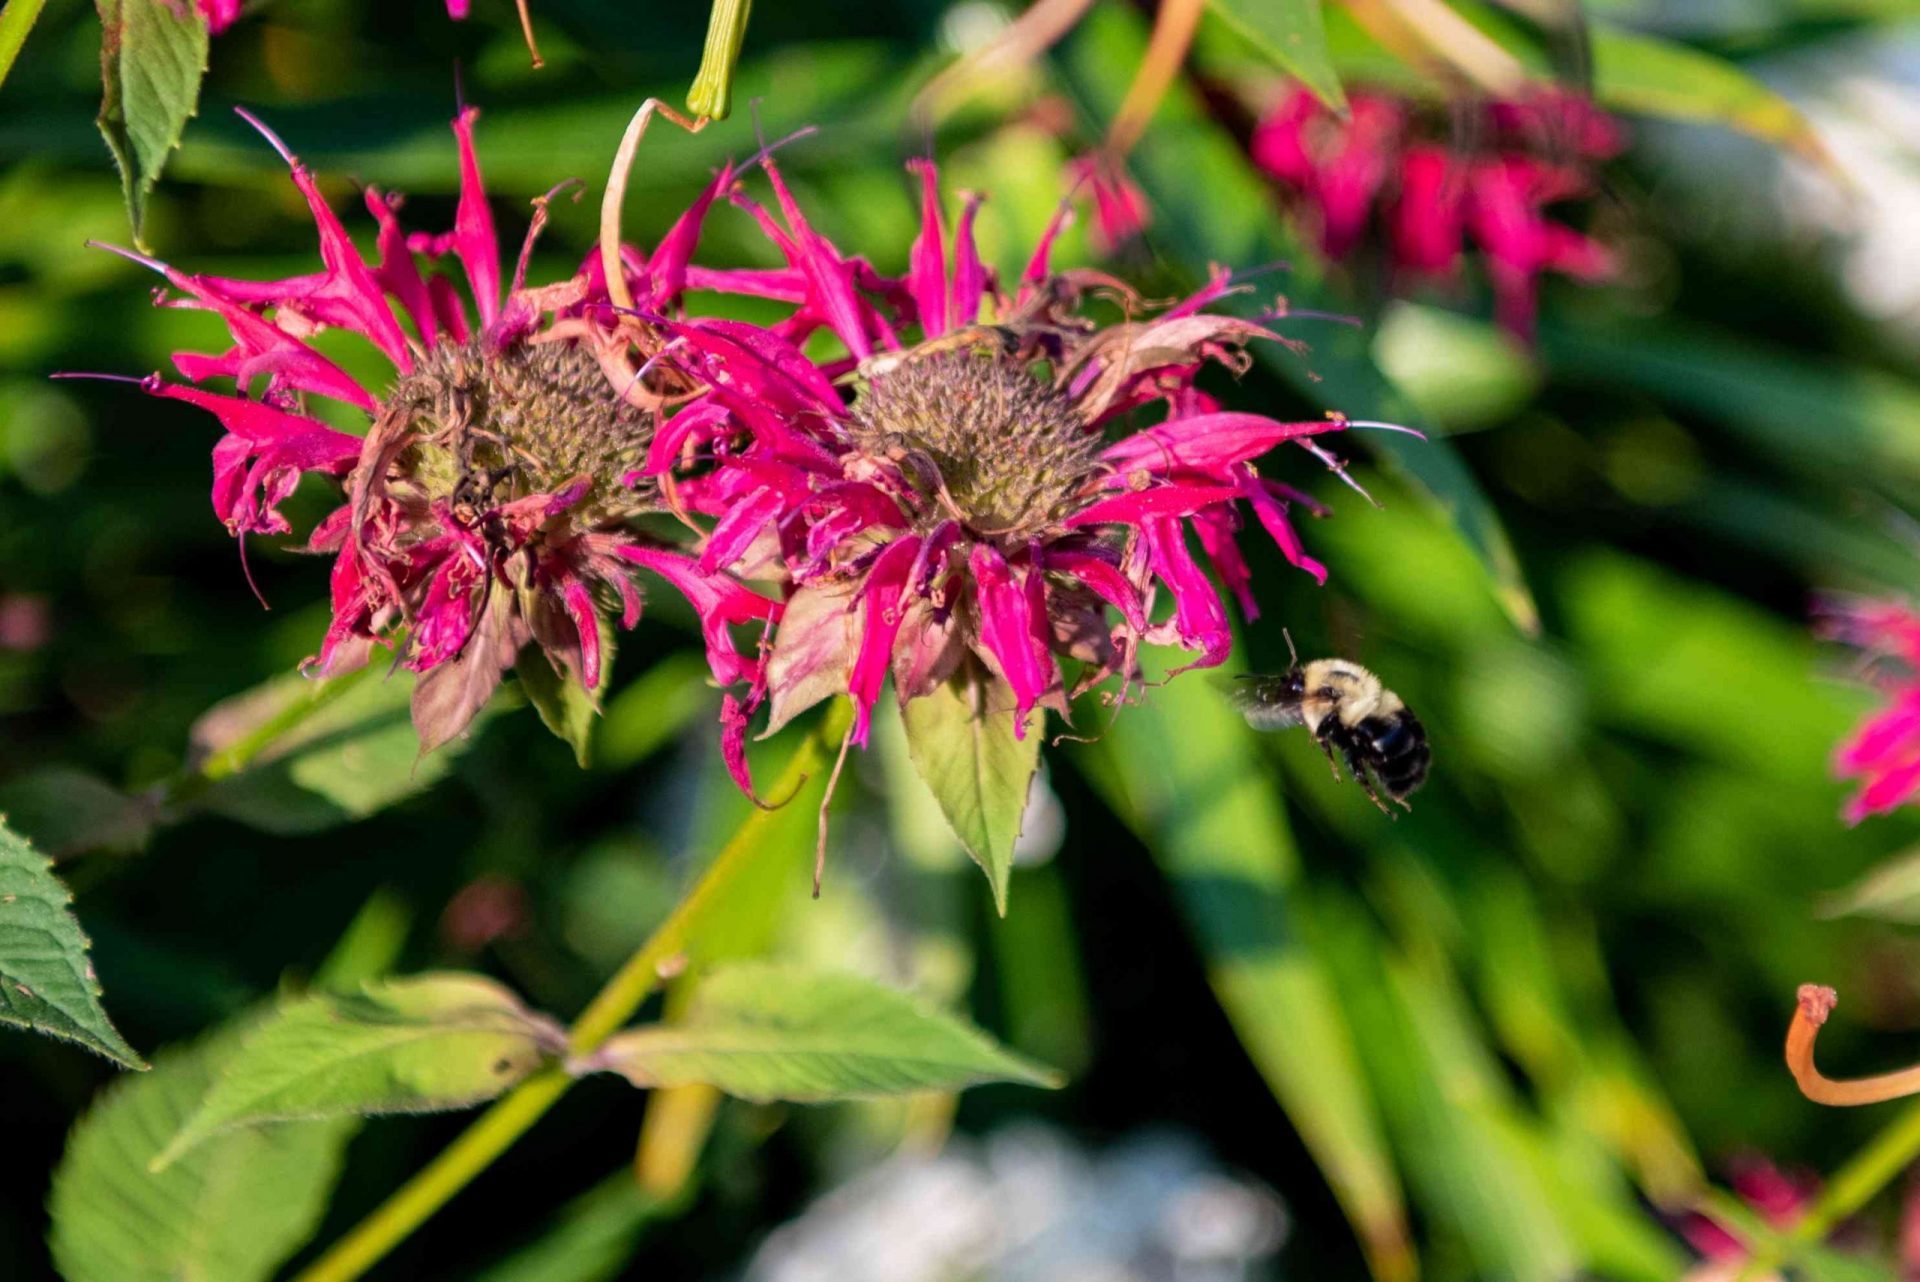 primer plano de flores rosas con un abejorro peludo revoloteando cerca